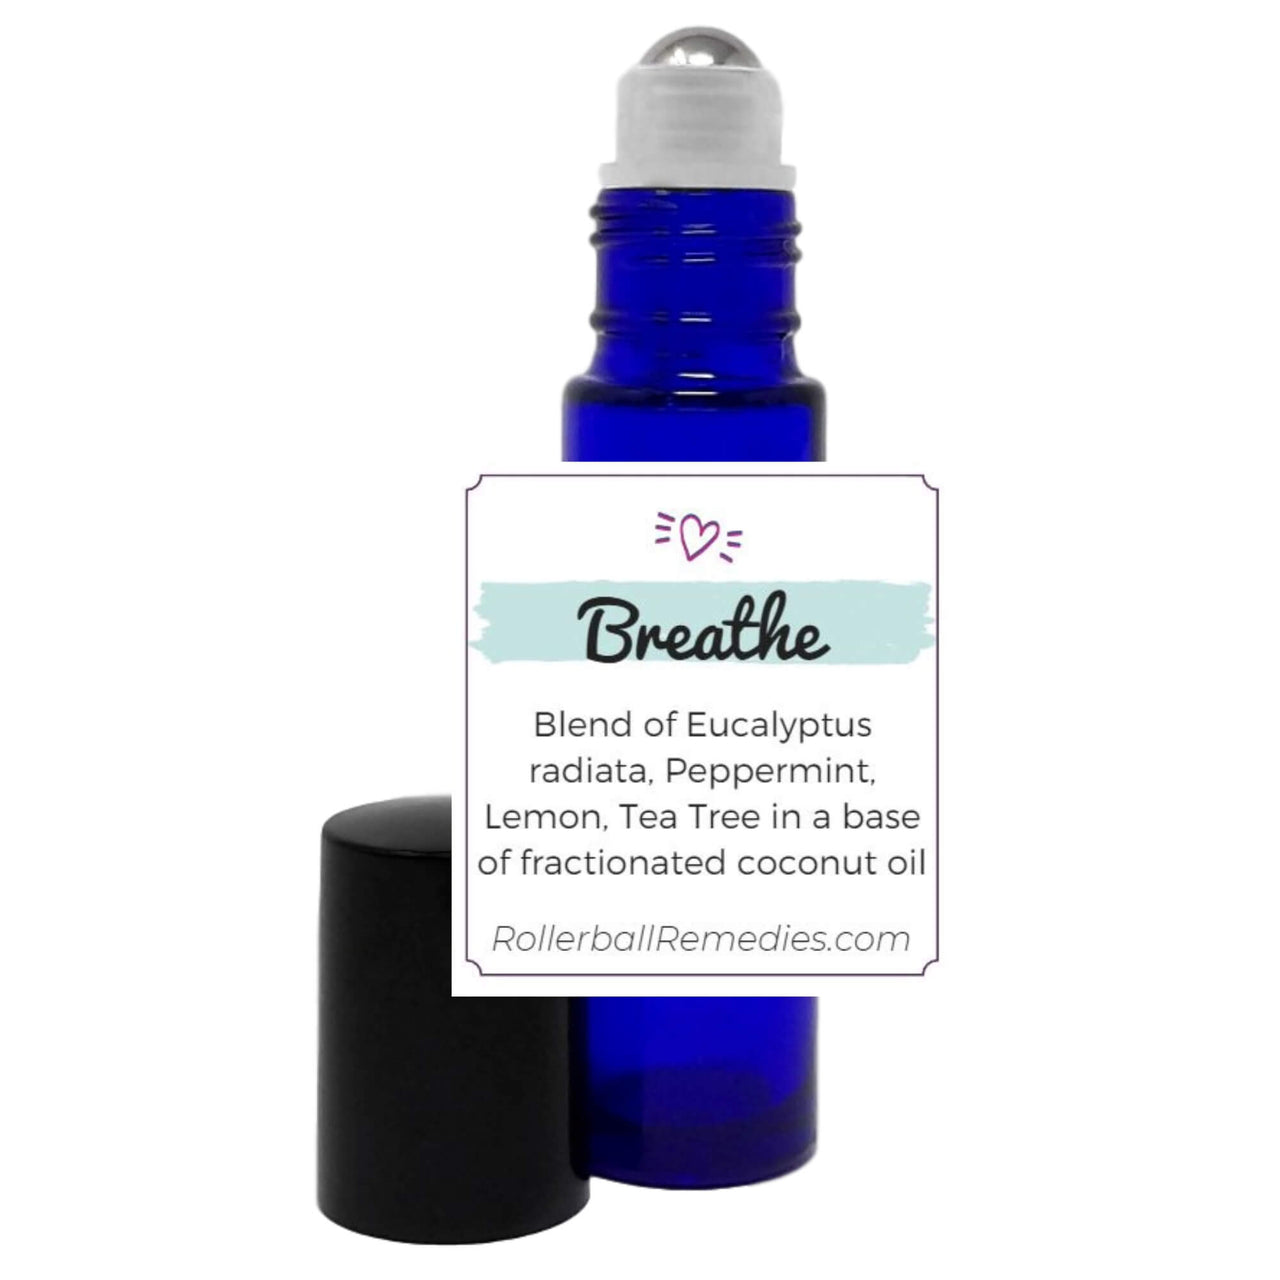 Breathe Essential Oil Roller Blend - 10 ml with Eucalyptus radiata, Peppermint, Lemon, and Tea Tree